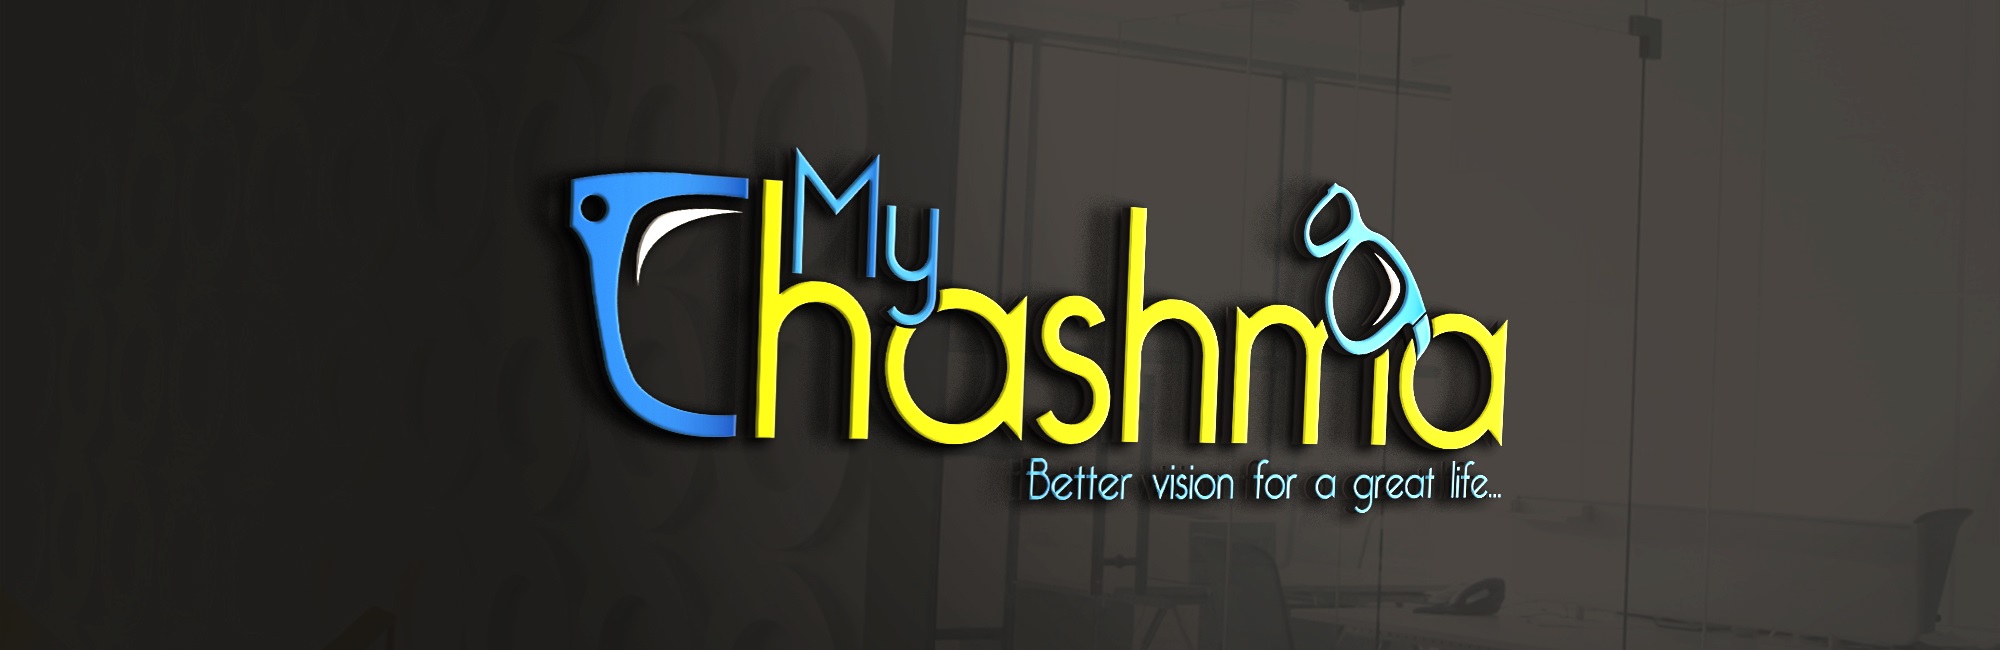 MyChashma | Sunglasses | Eyeglasses | Contact-Lenses Collection